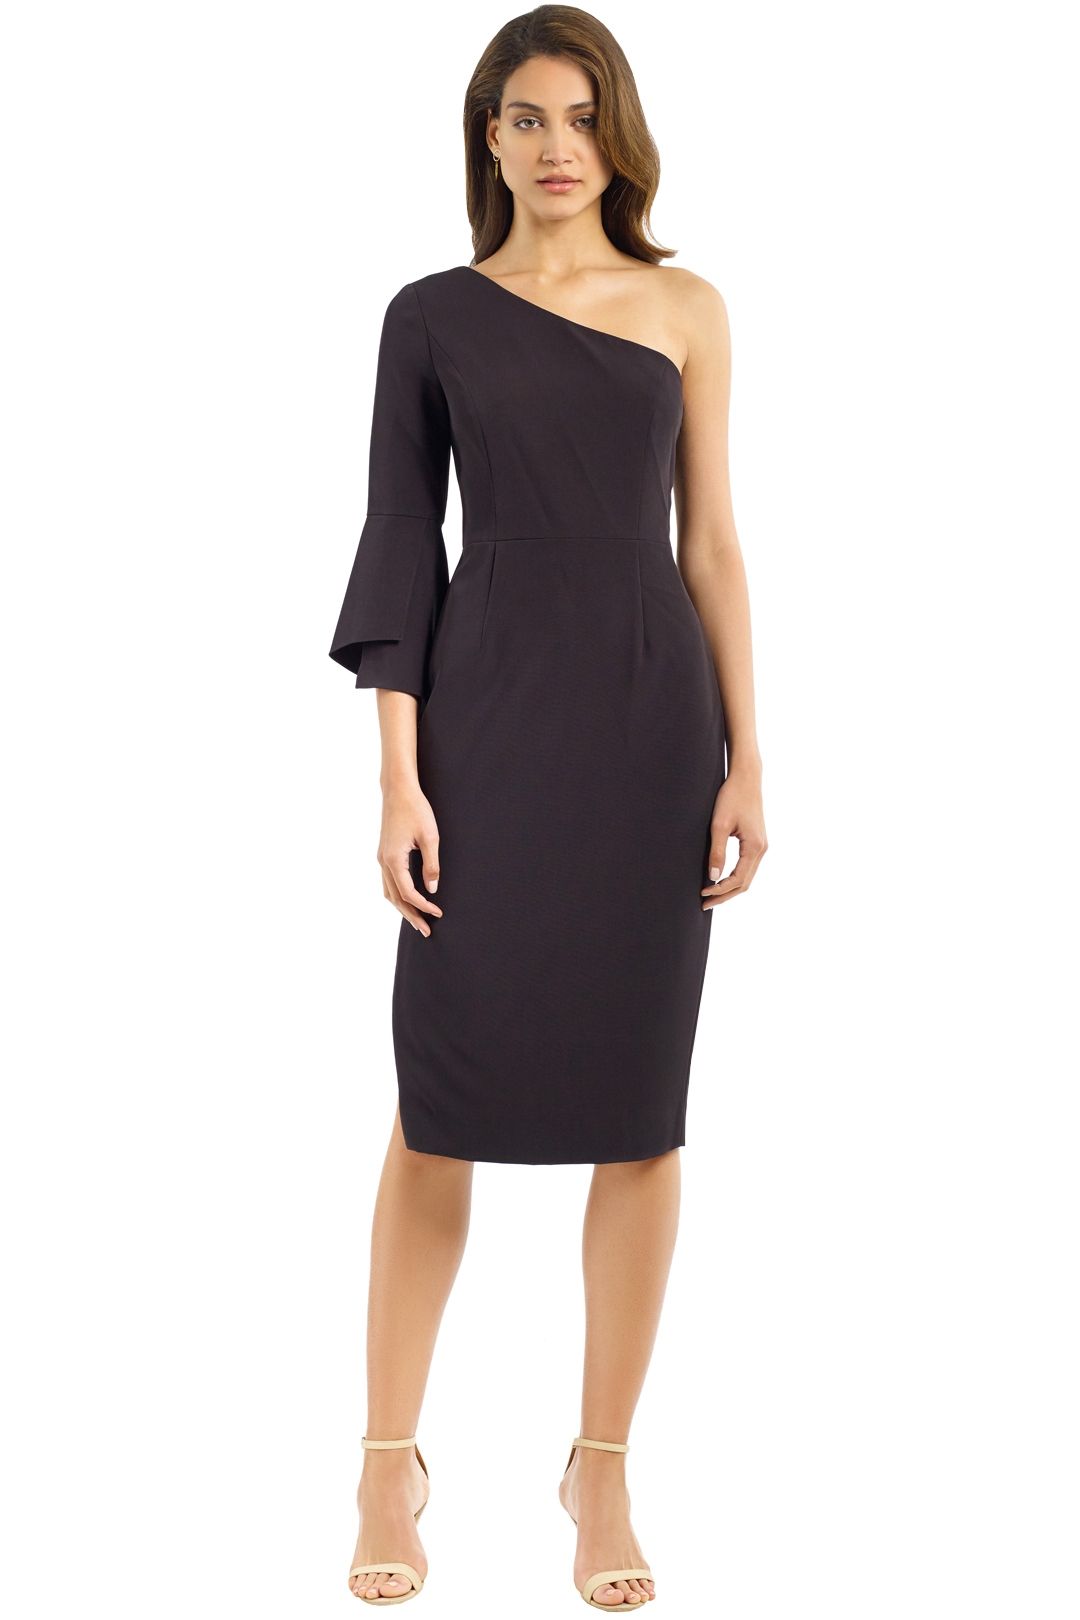 Milly - Sadrine Dress - Black - Front